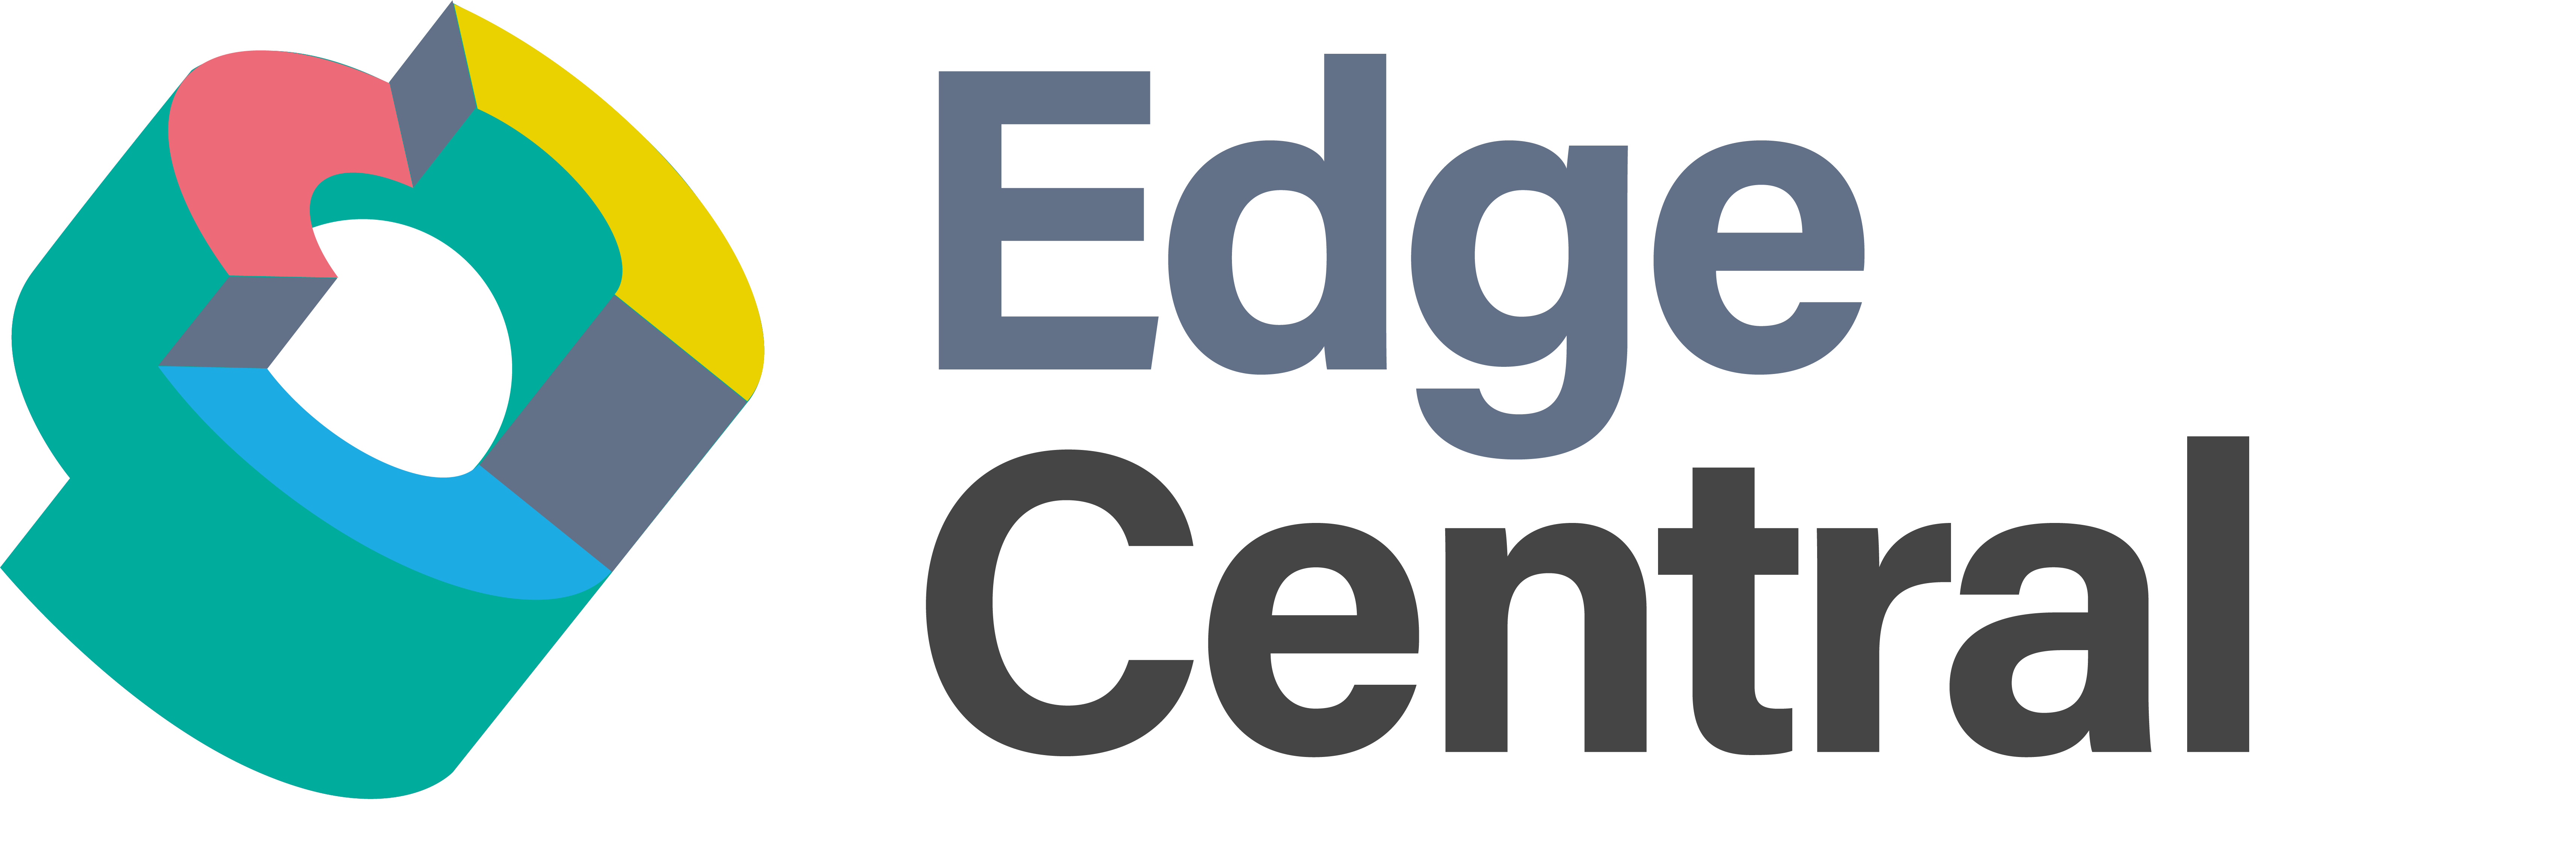 Edge Xpert logo | IOTech Systems, Smart City & Smart Venue Solutions